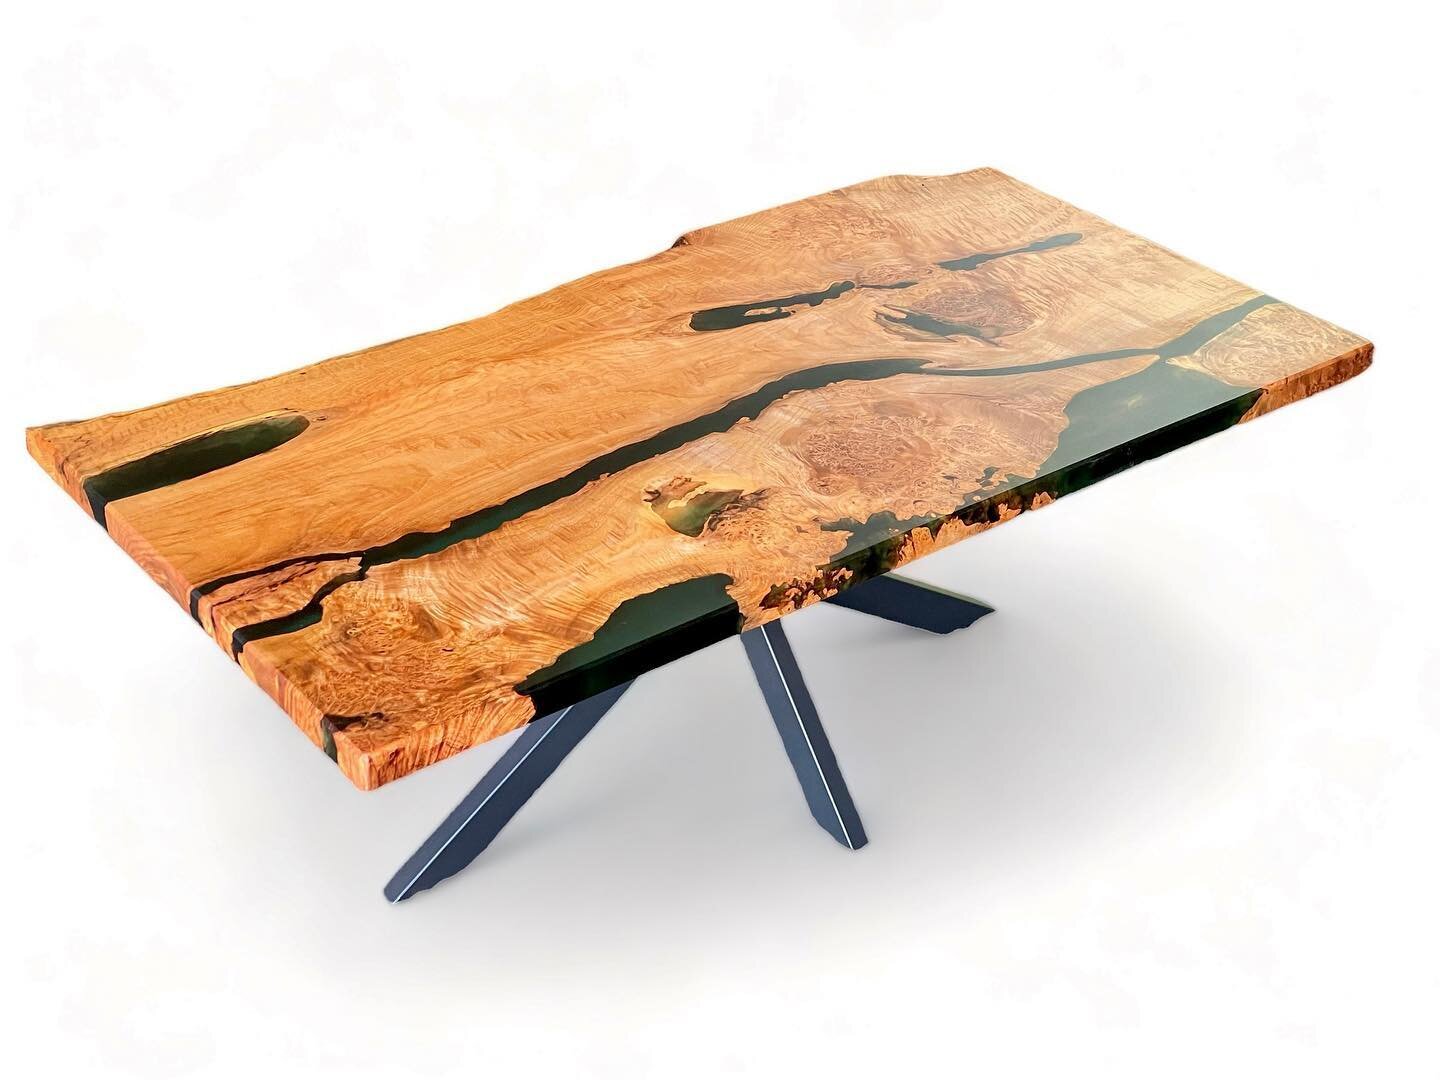 Maple burl coffee table. 🍁